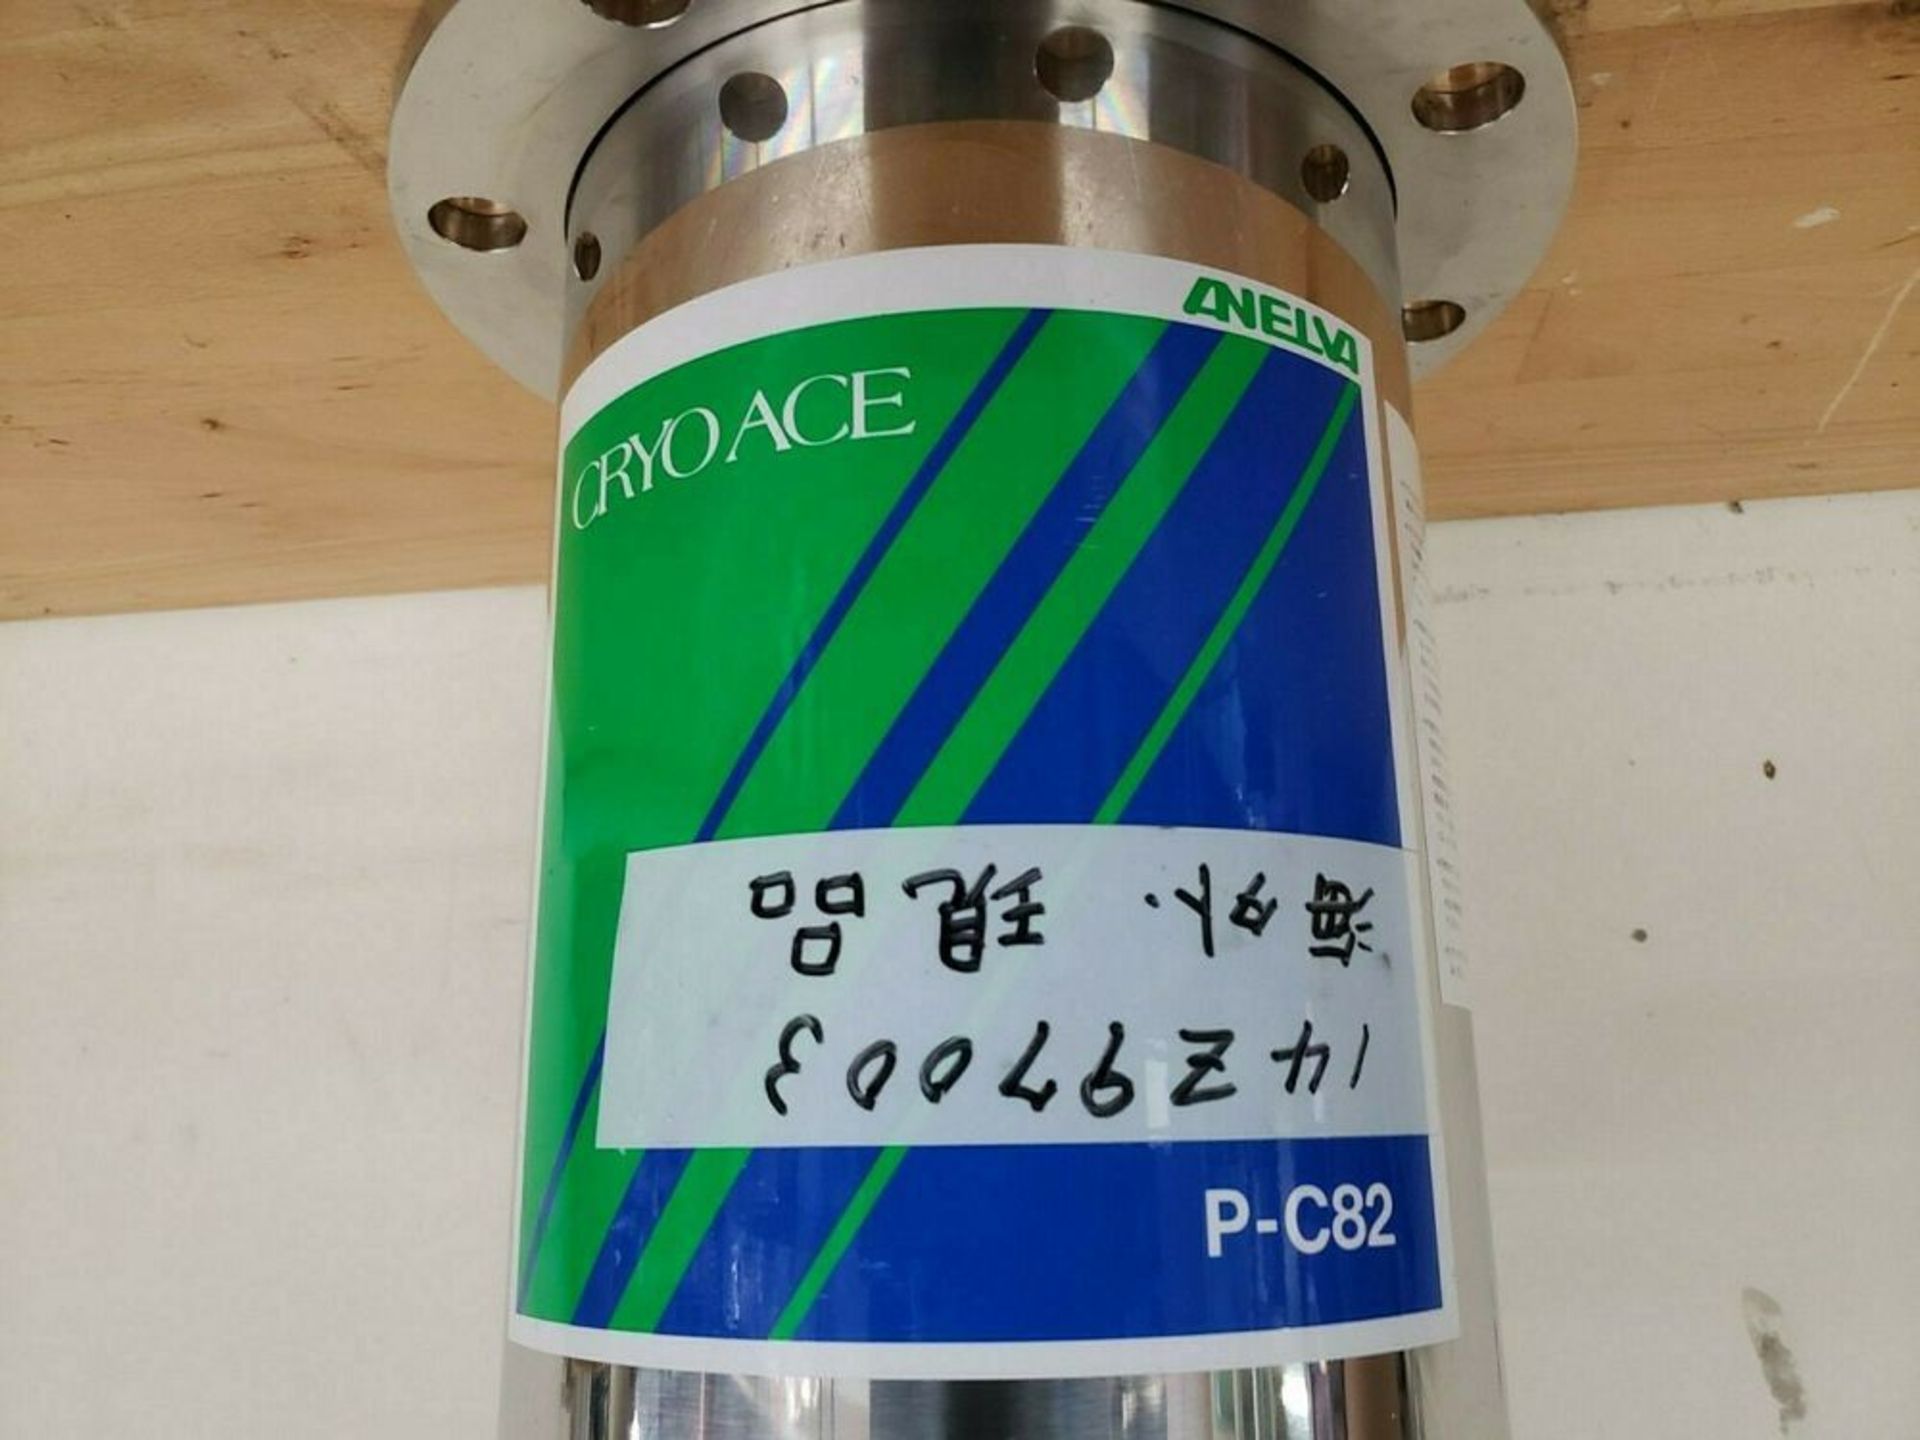 Anelva Cryoace Cryo Pump W/ Sumitomo Cryogenic Refrigerator - Image 5 of 8